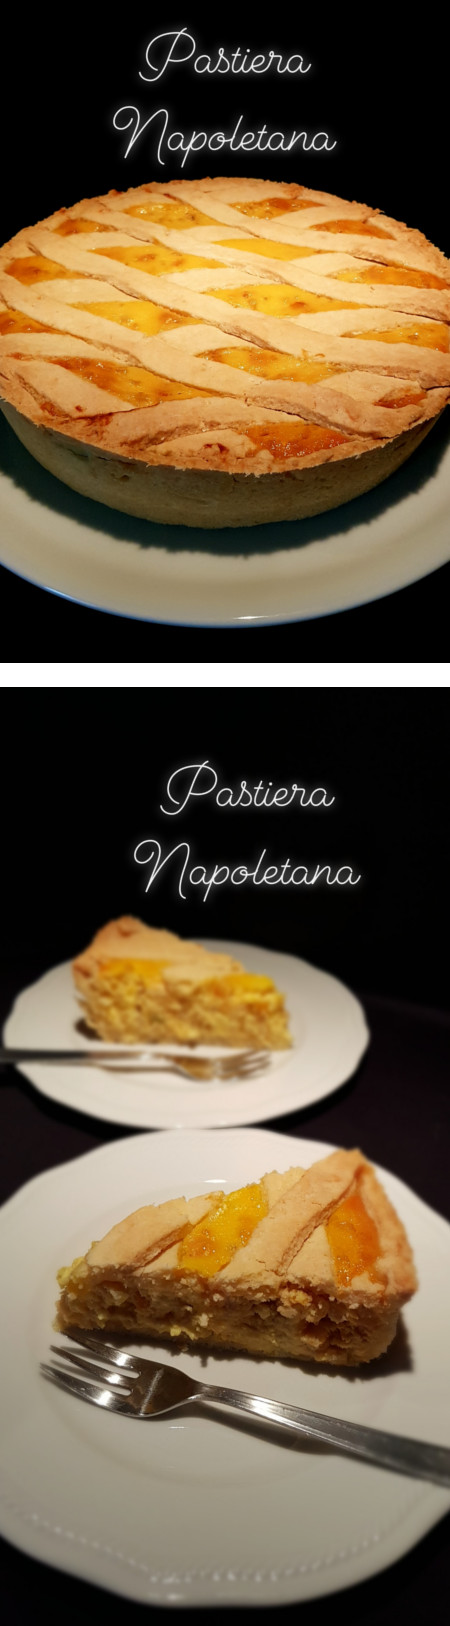 Pastiera Napoletana Recipe and Class